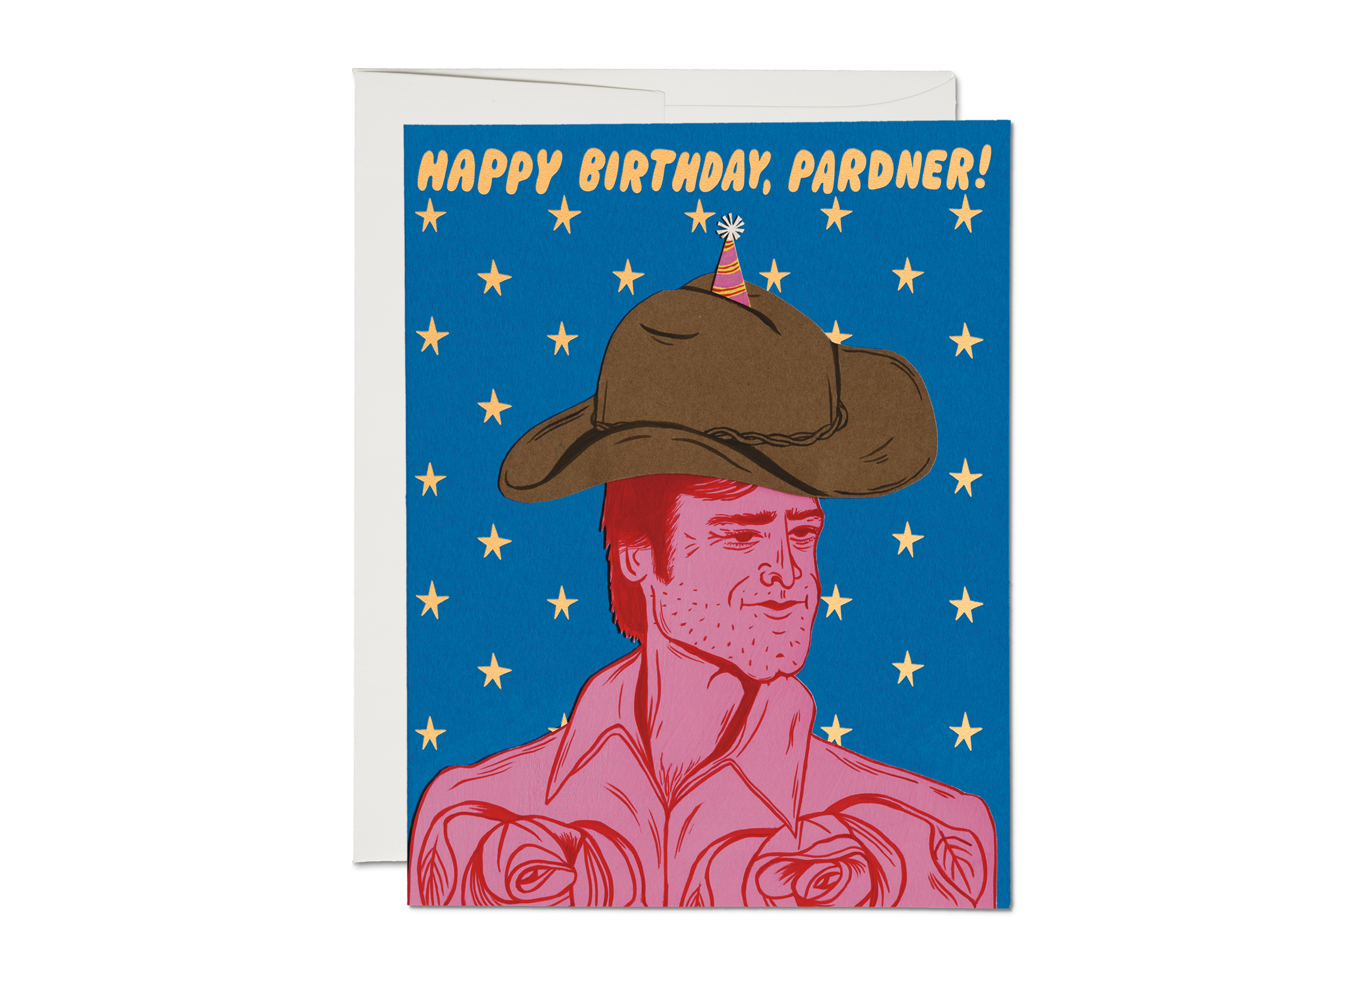 Birthday Pardner birthday greeting card